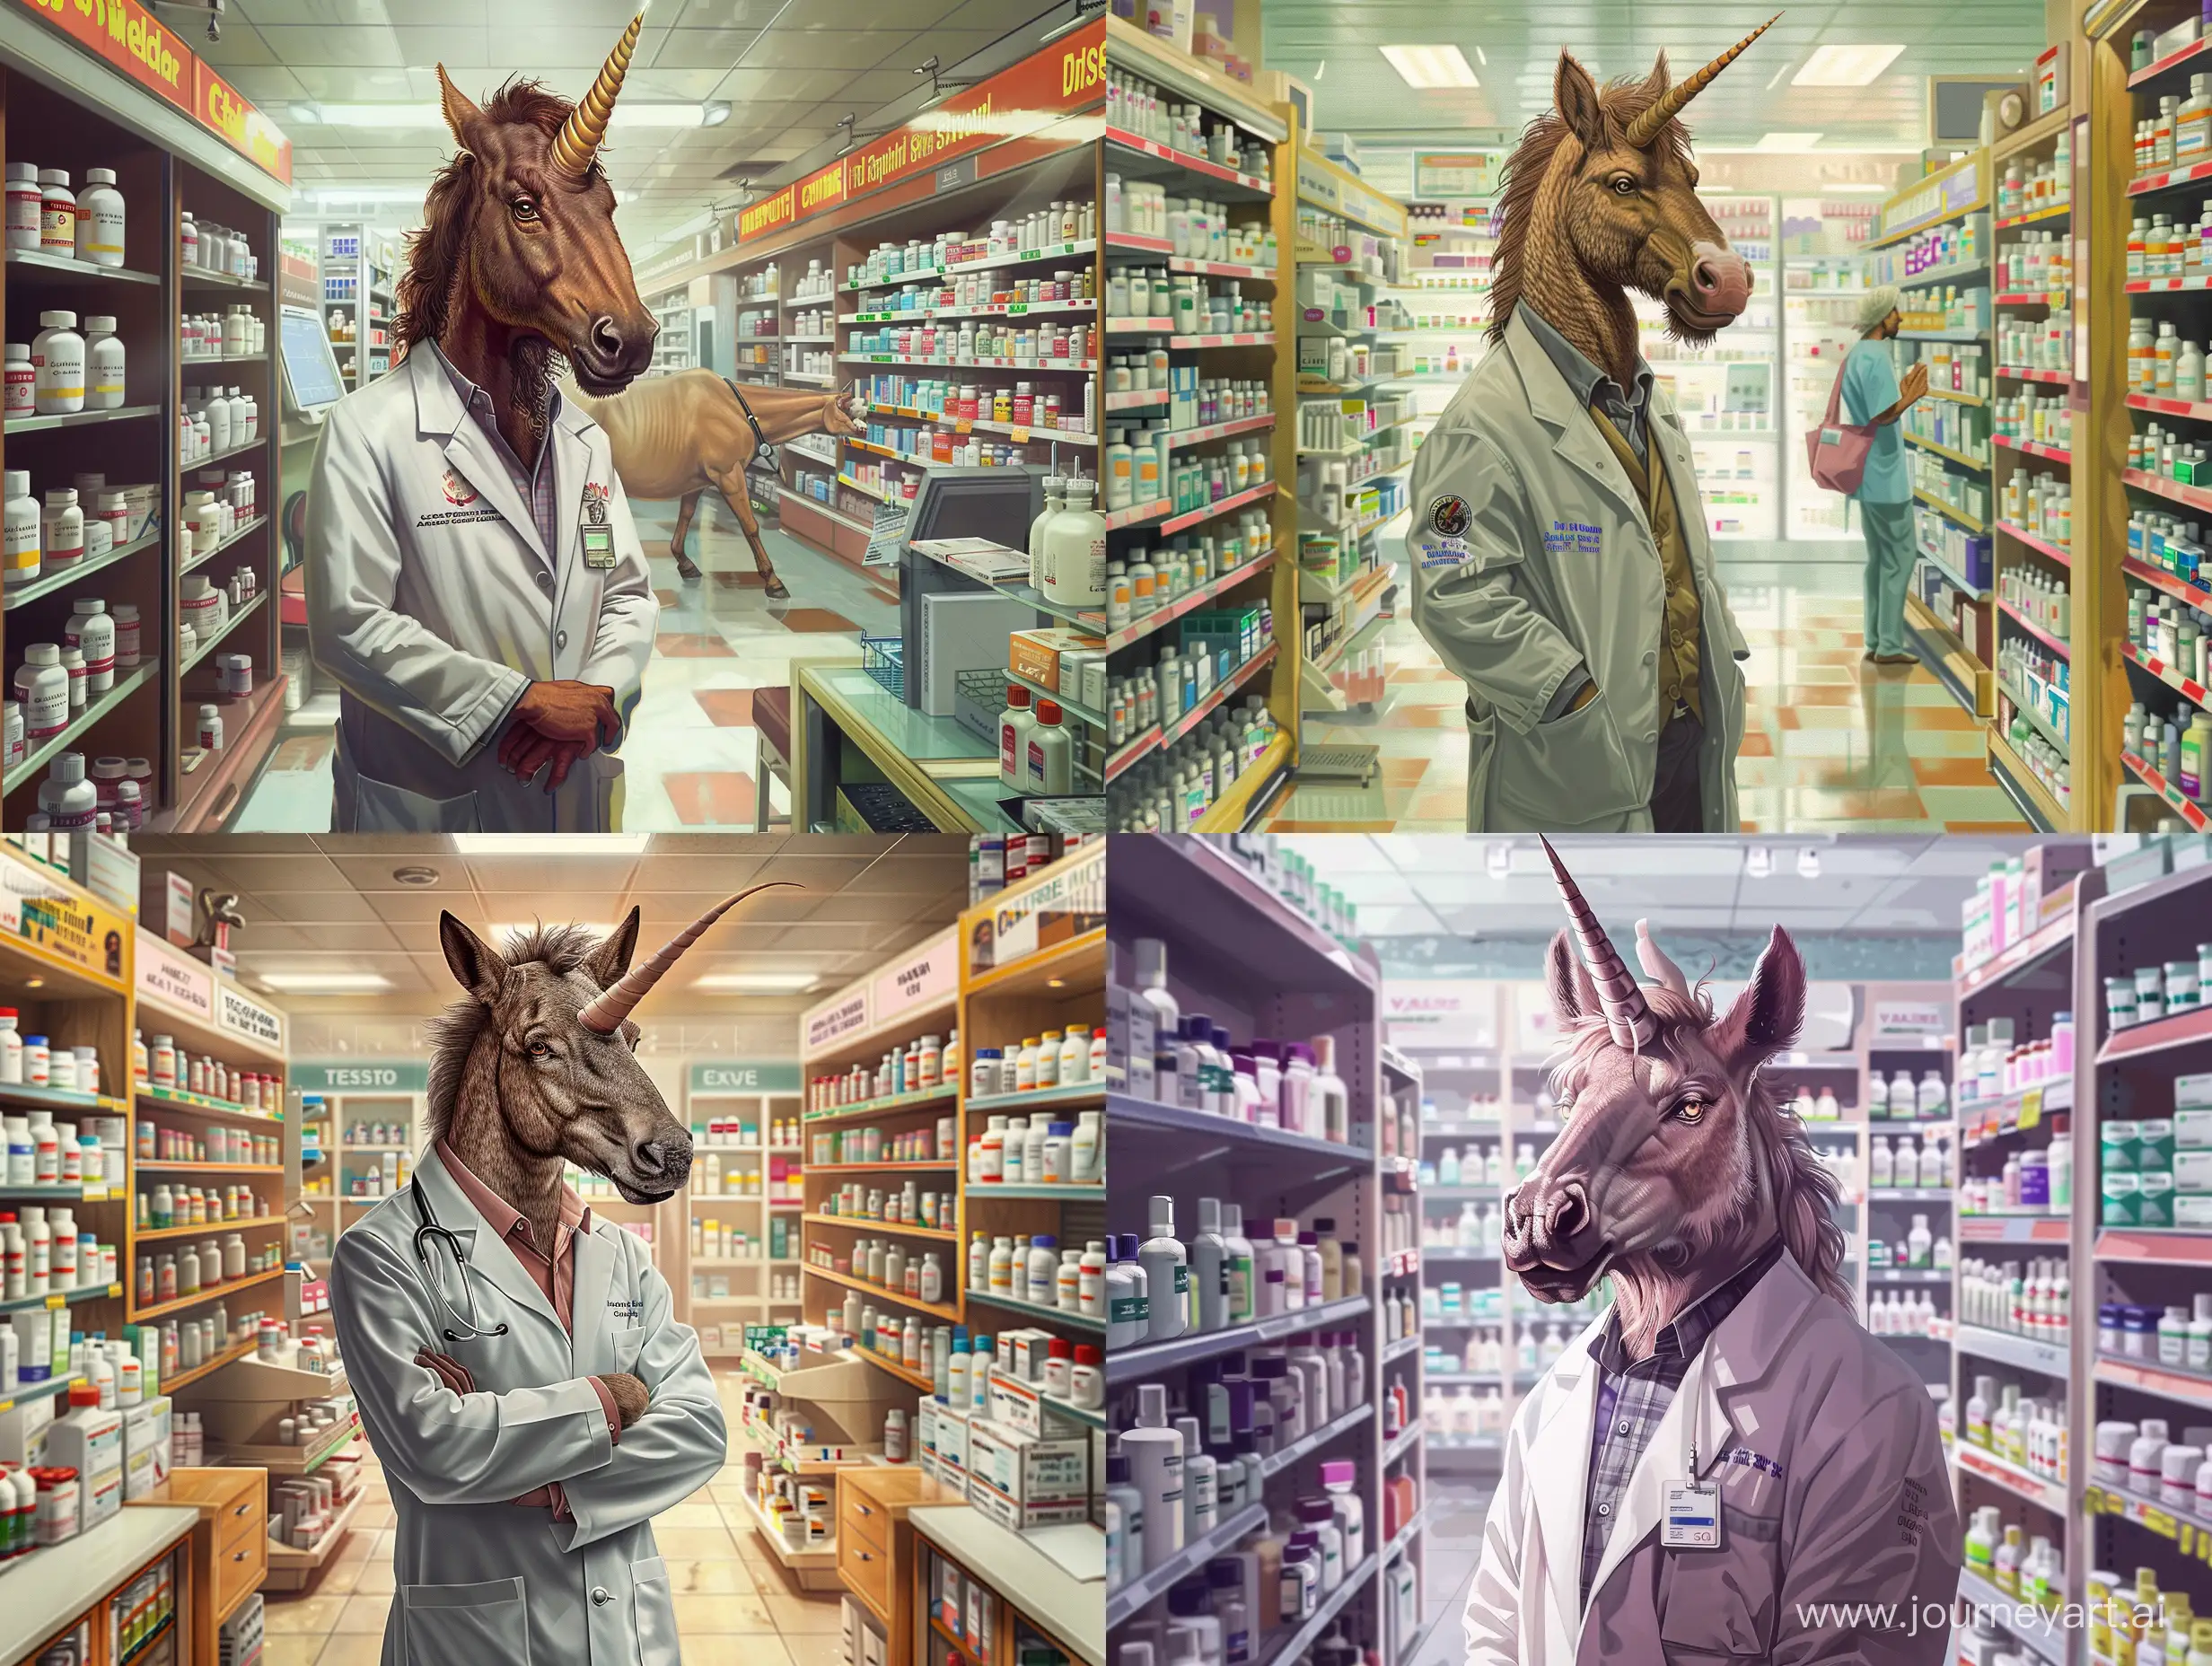 Modern-Centaur-Pharmacist-in-HighDefinition-Lab-Coat-at-21st-Century-Retail-Pharmacy